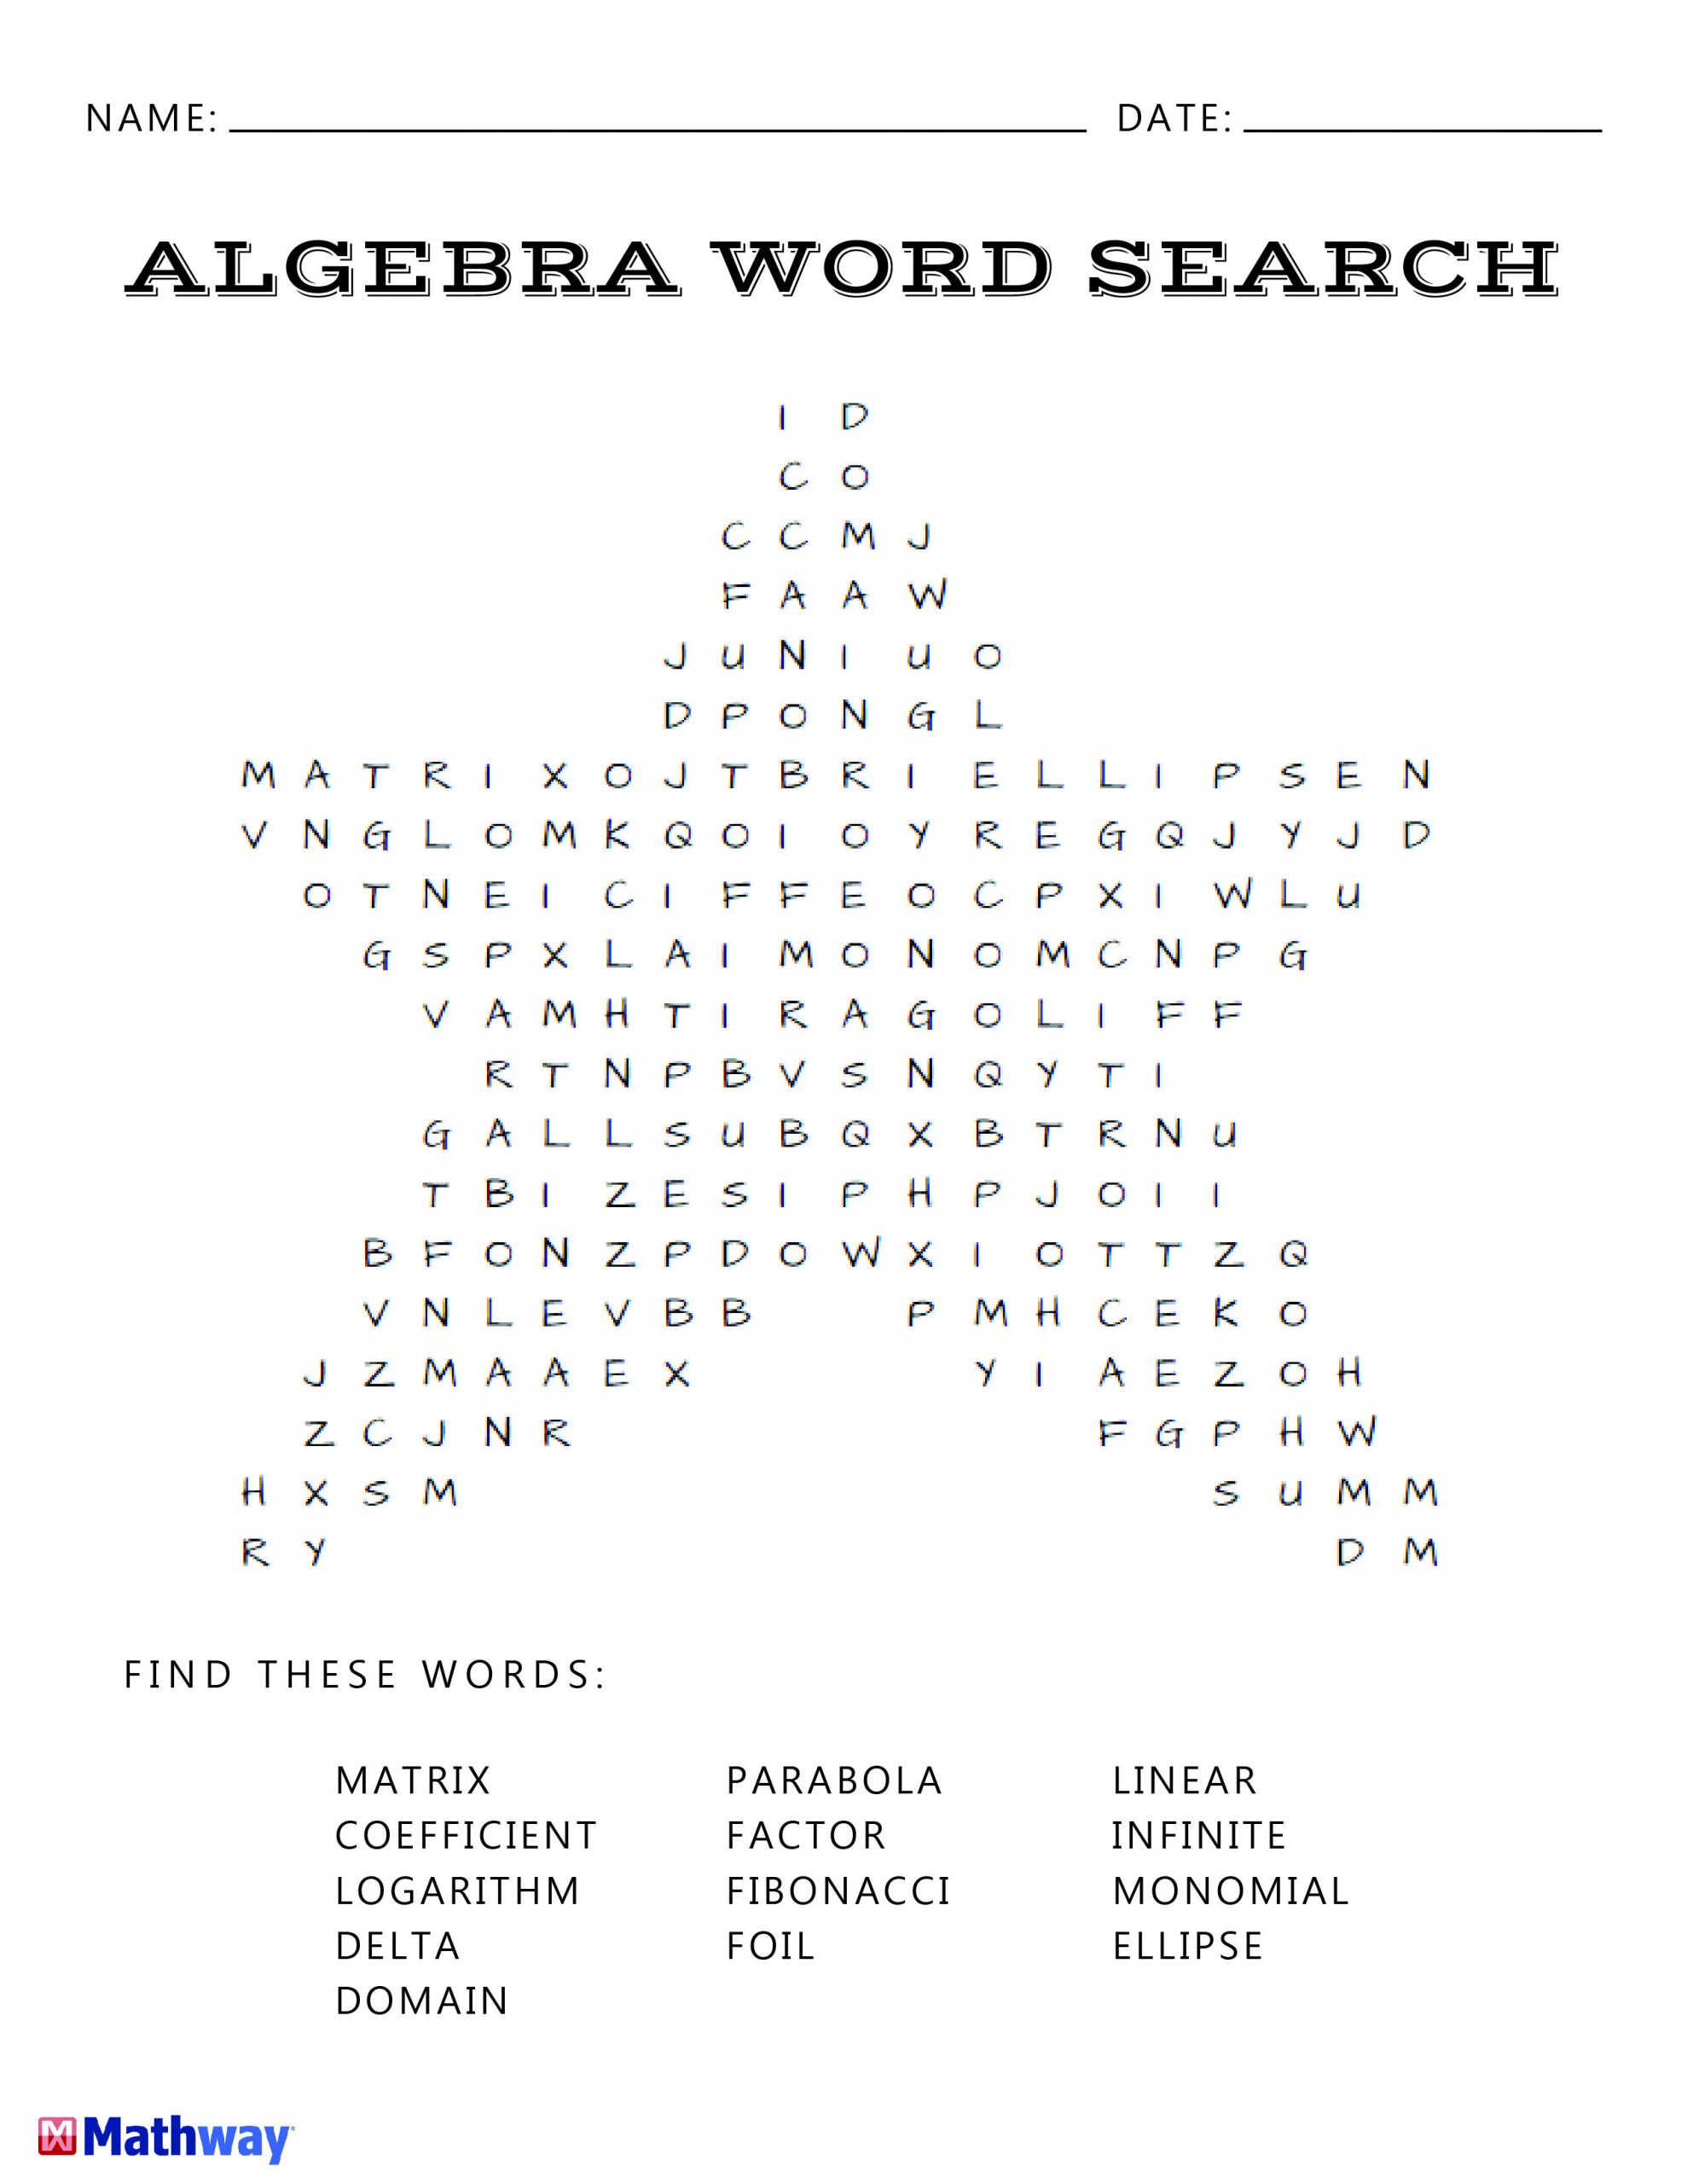 Algebra Word Search Activity! #algebra #activity #mathway